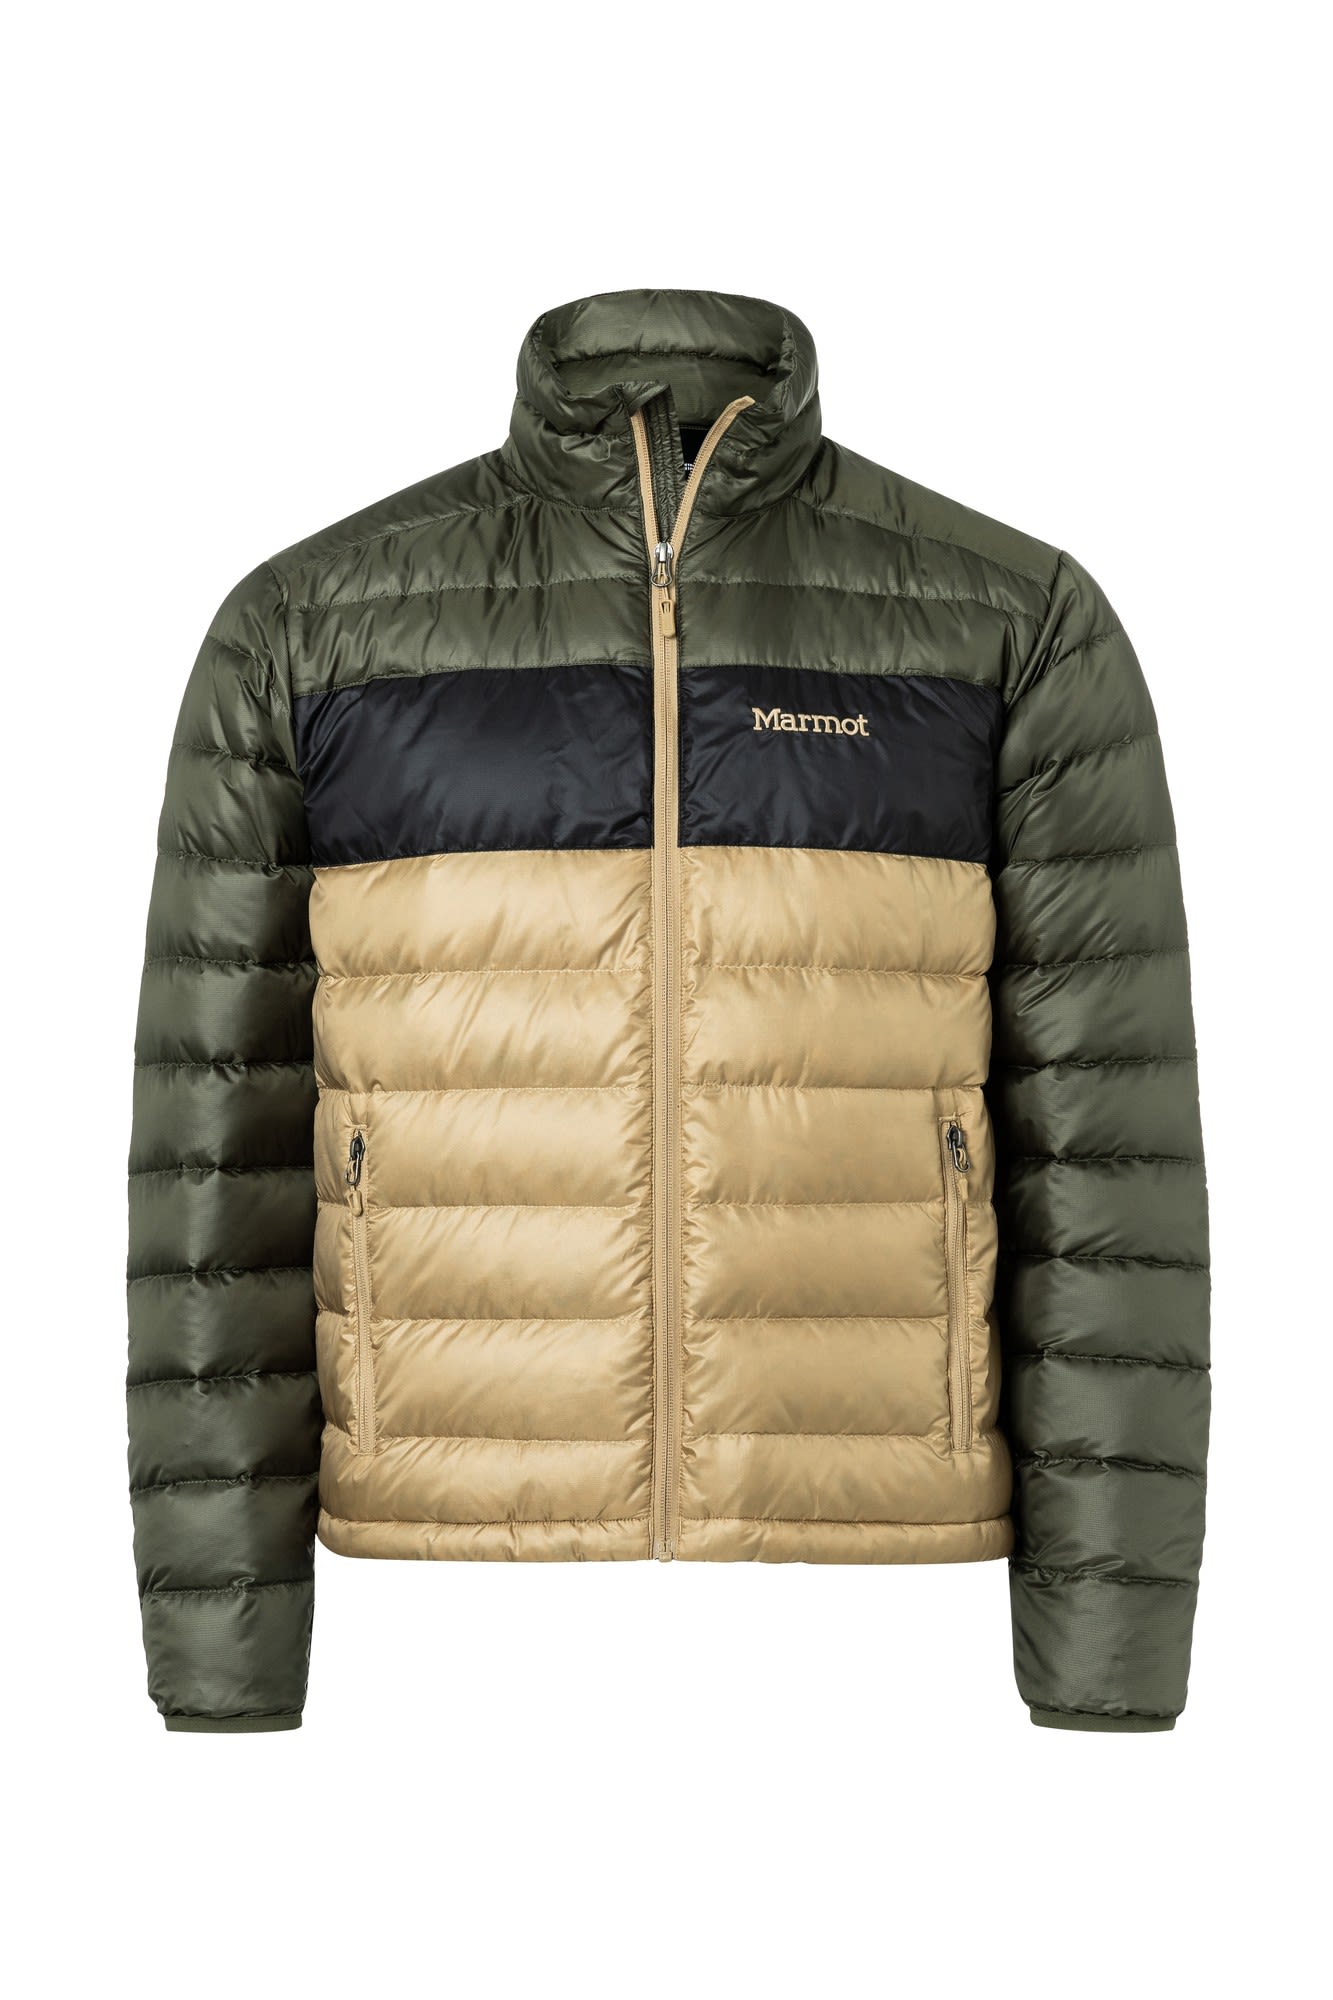 Marmot Ares Jacket Colorblock - Beige - Grn- Male Daunen Ponchos und Capes- Grsse S - Farbe Nori - Black